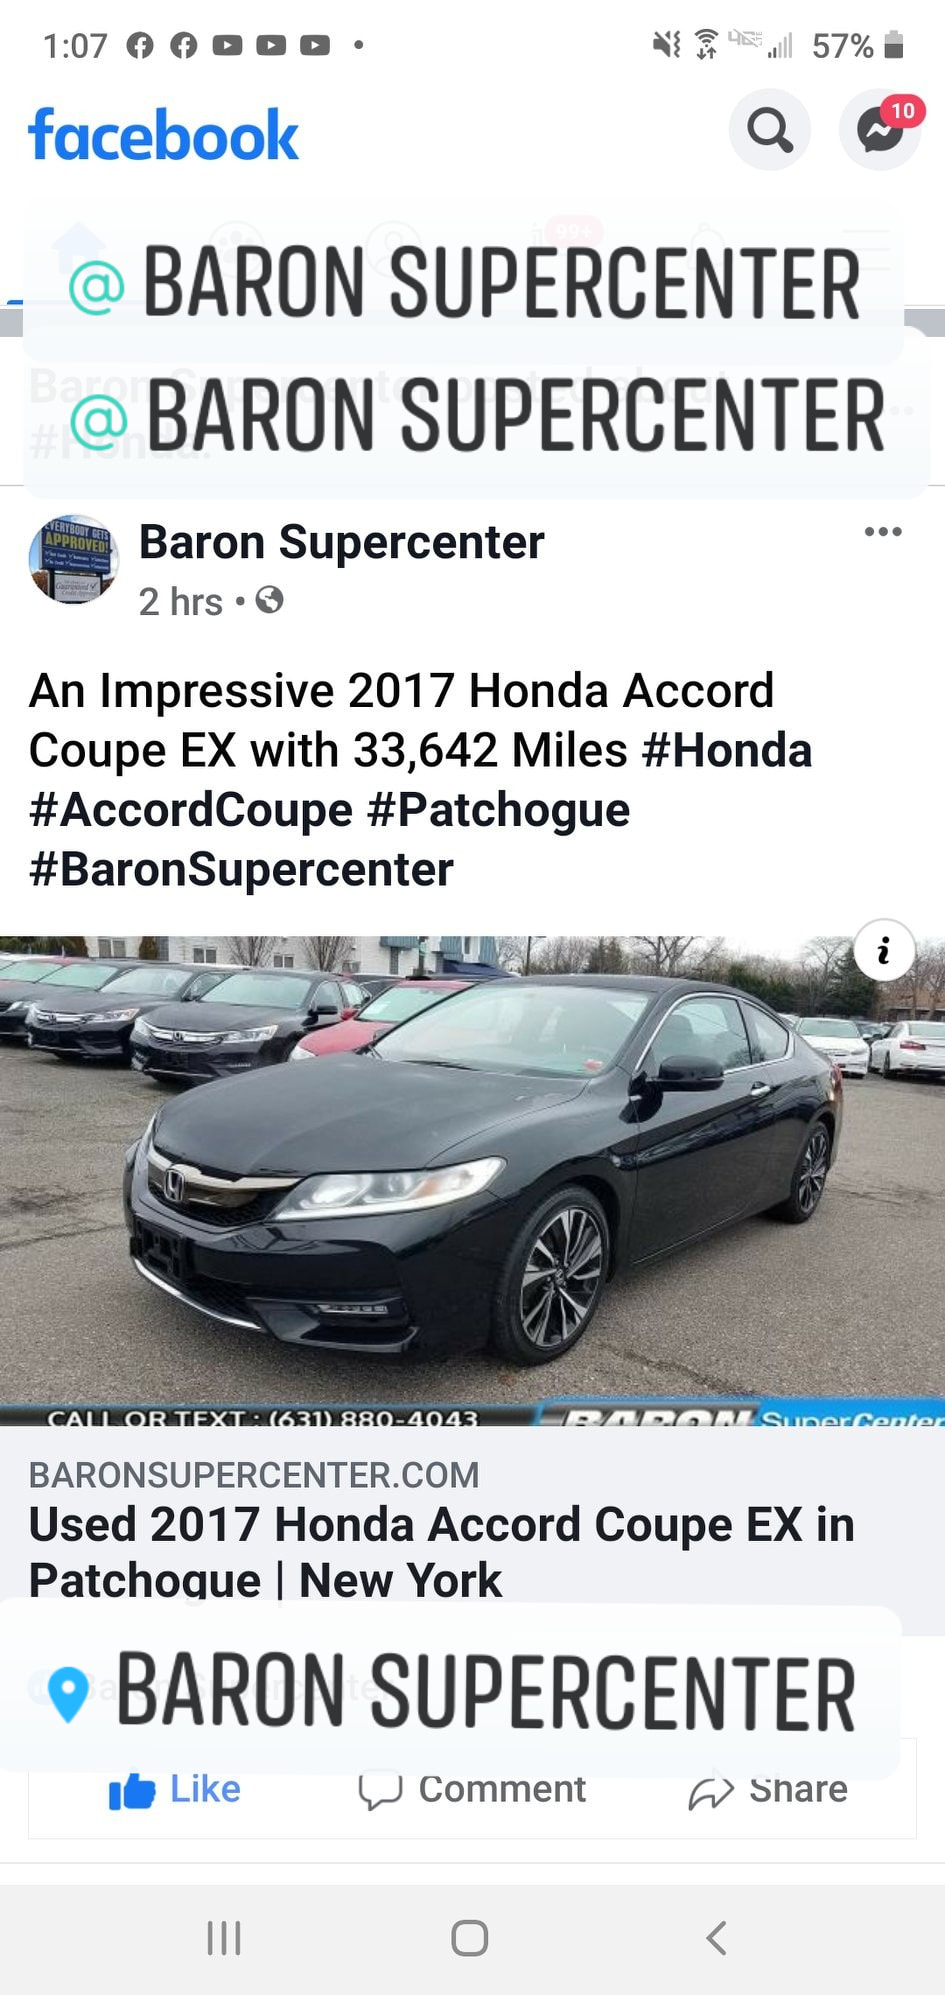 Baron Supercenter